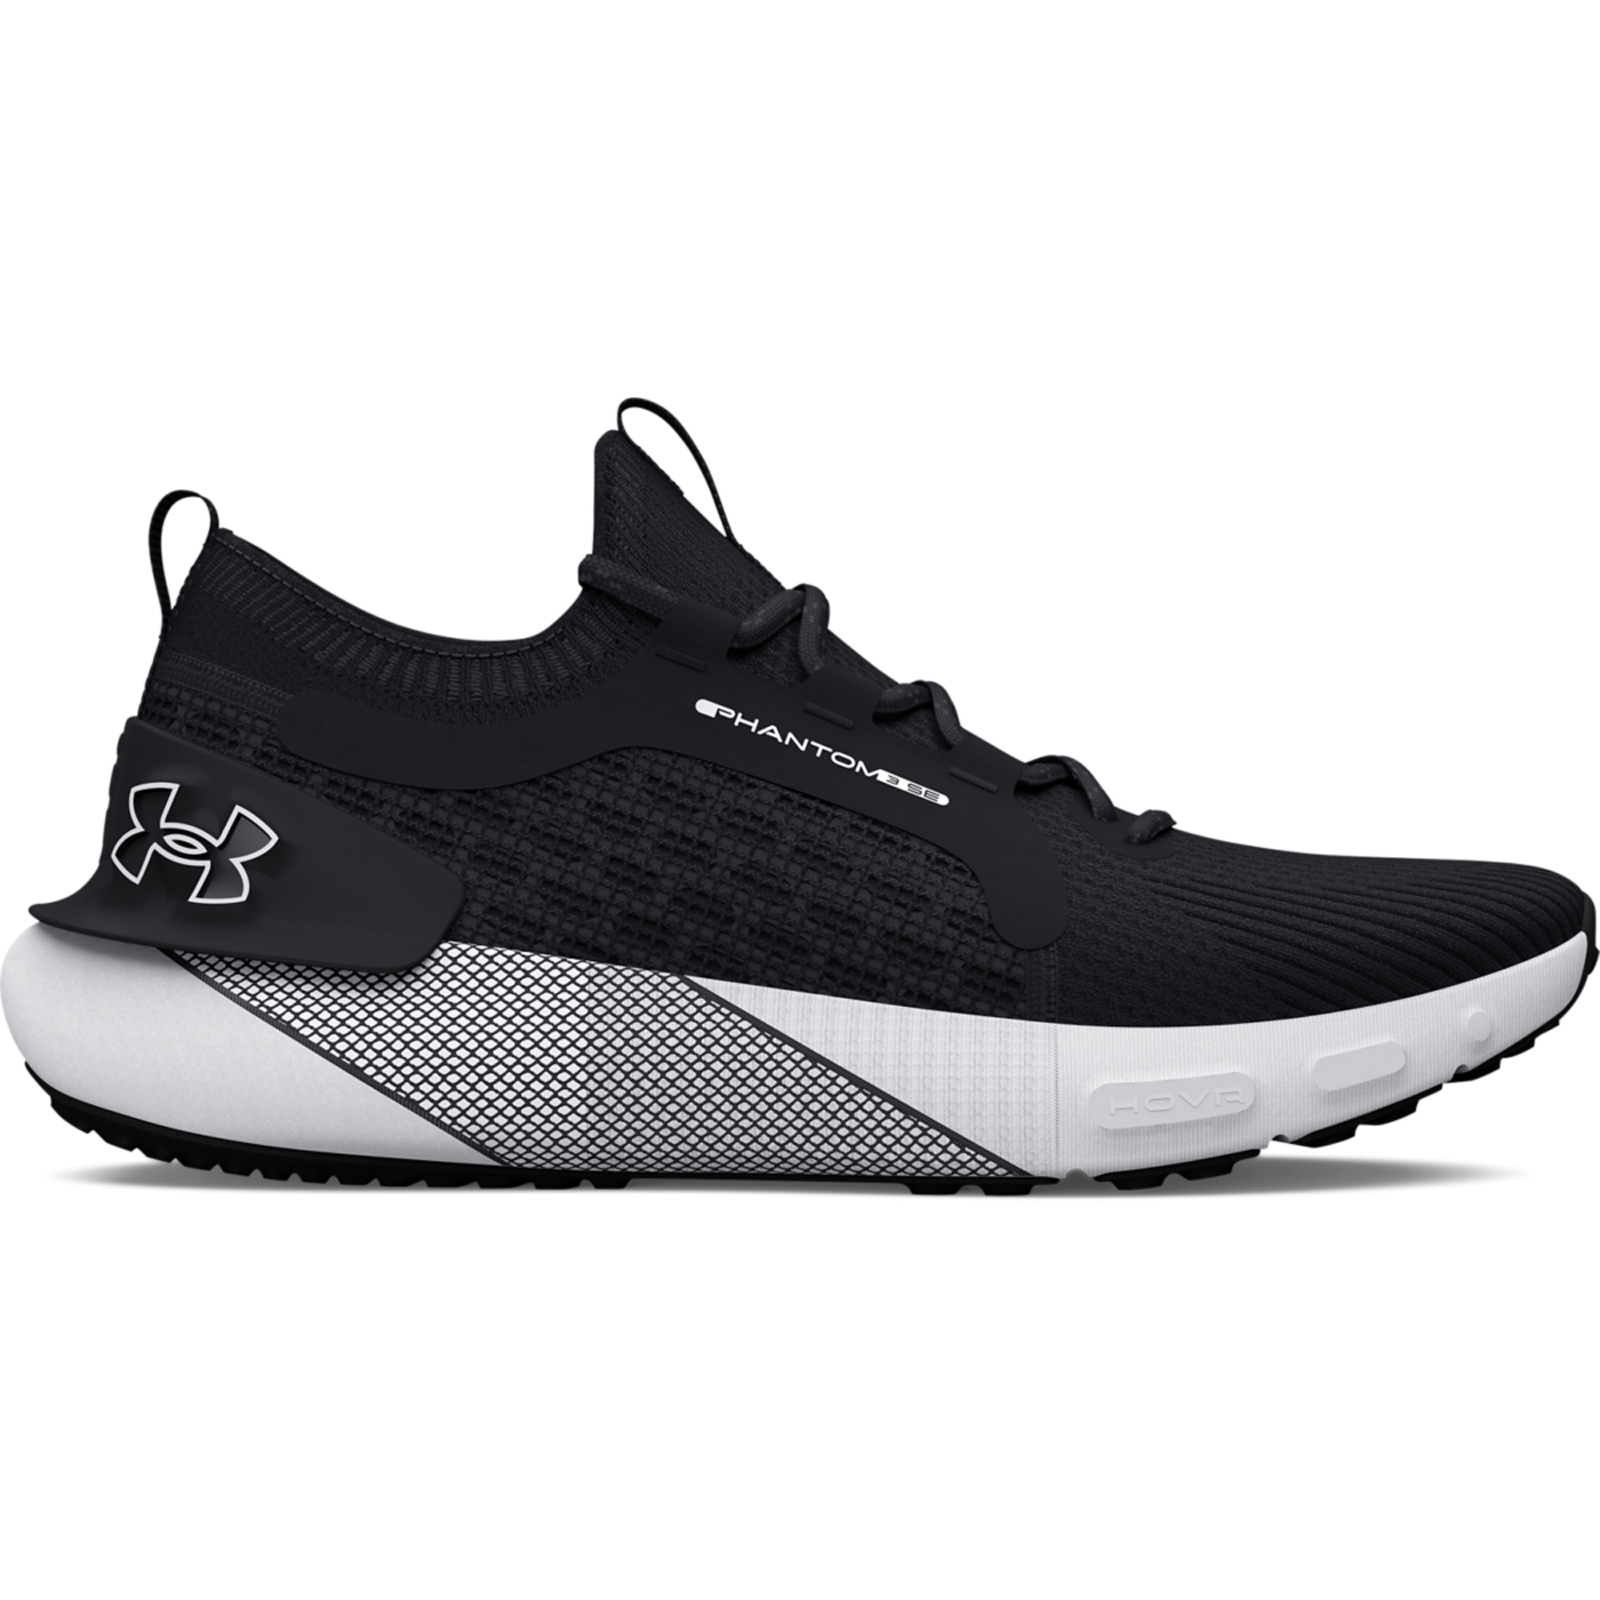 Under Armour - Men's UA HOVR™ Phantom 3 SE Running Shoes - Black/Jet Gray/White Ανδρικά > Παπούτσια > Αθλητικά > Παπούτσι Low Cut